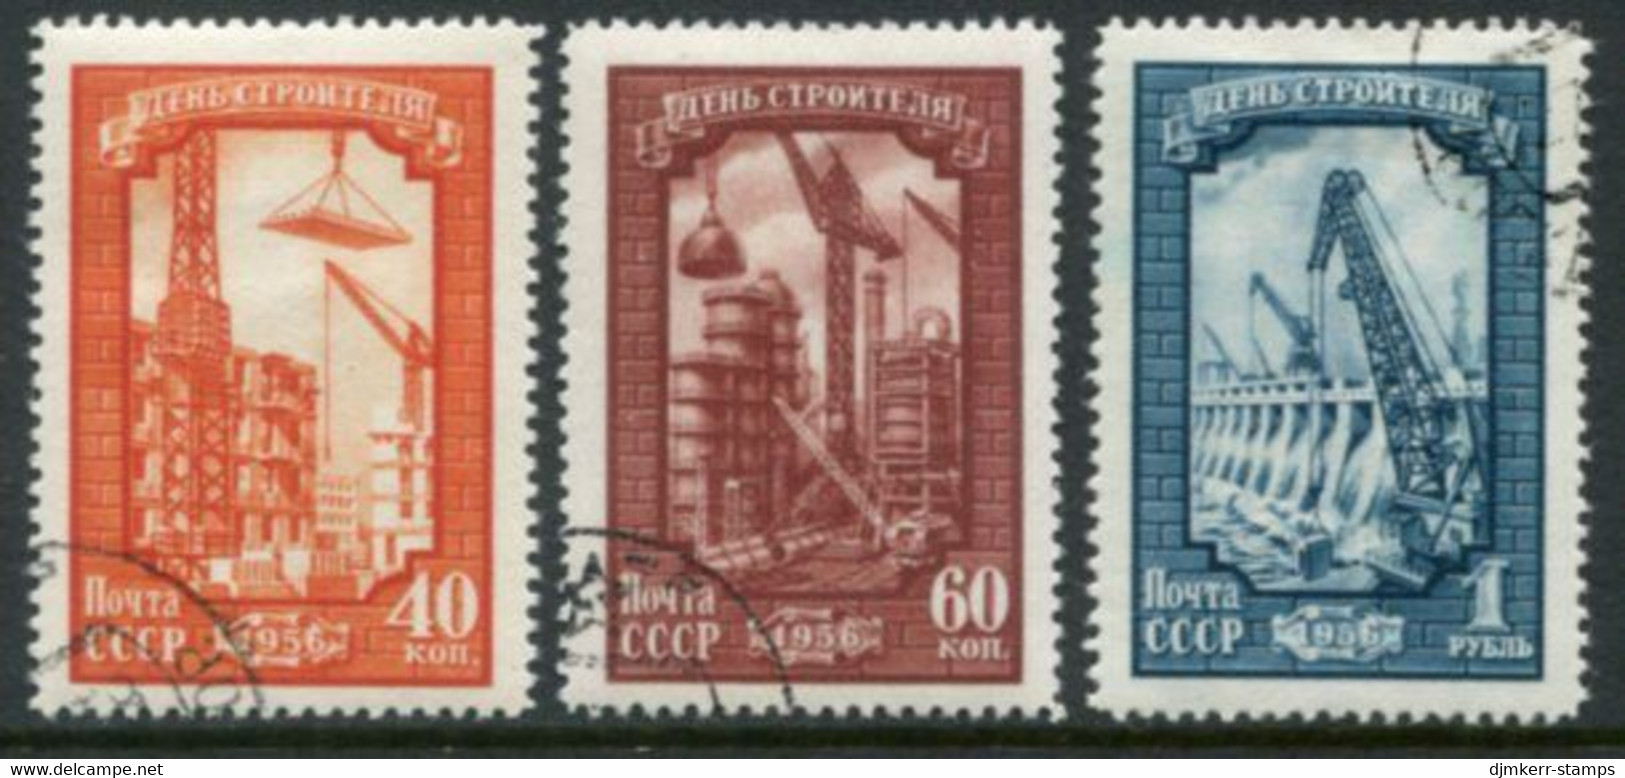 SOVIET UNION 1956 Construction Worker's Day Used  Michel 1864, 1892-93 - Oblitérés